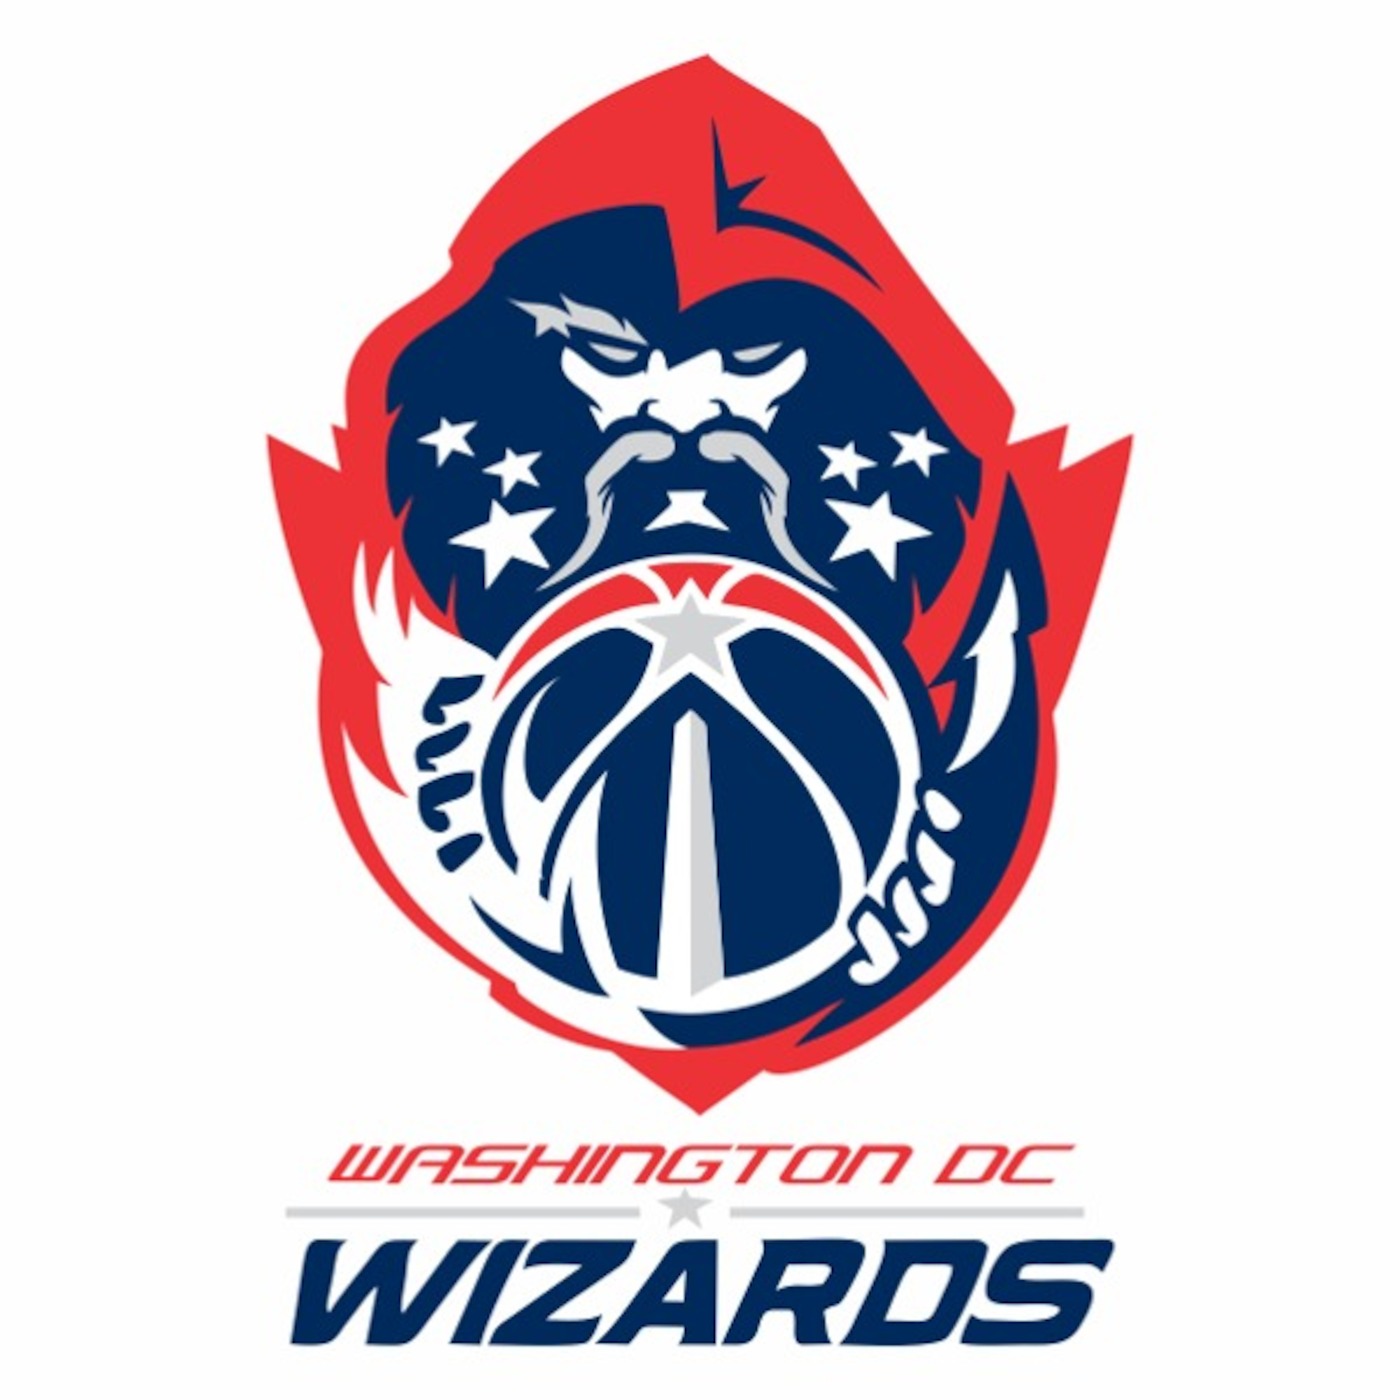 '16-17 First Quarter Washington Wizards Review